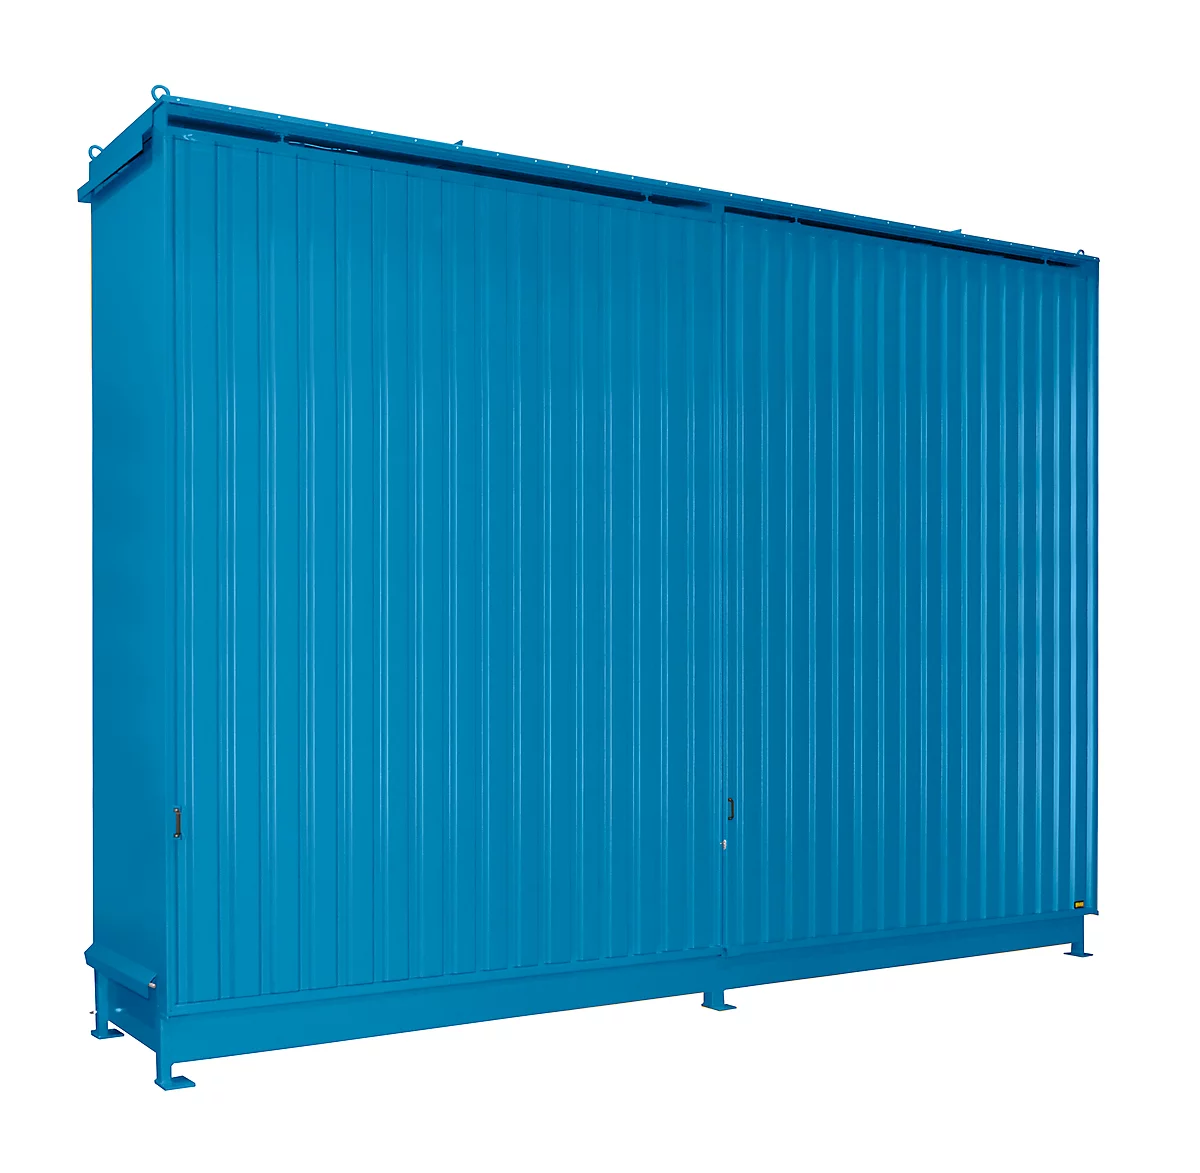 Contenedor de estantes BAUER CEN 65-3 IBC, acero, puerta corredera, ancho 7200 x fondo 1600 x alto 4965 mm, azul